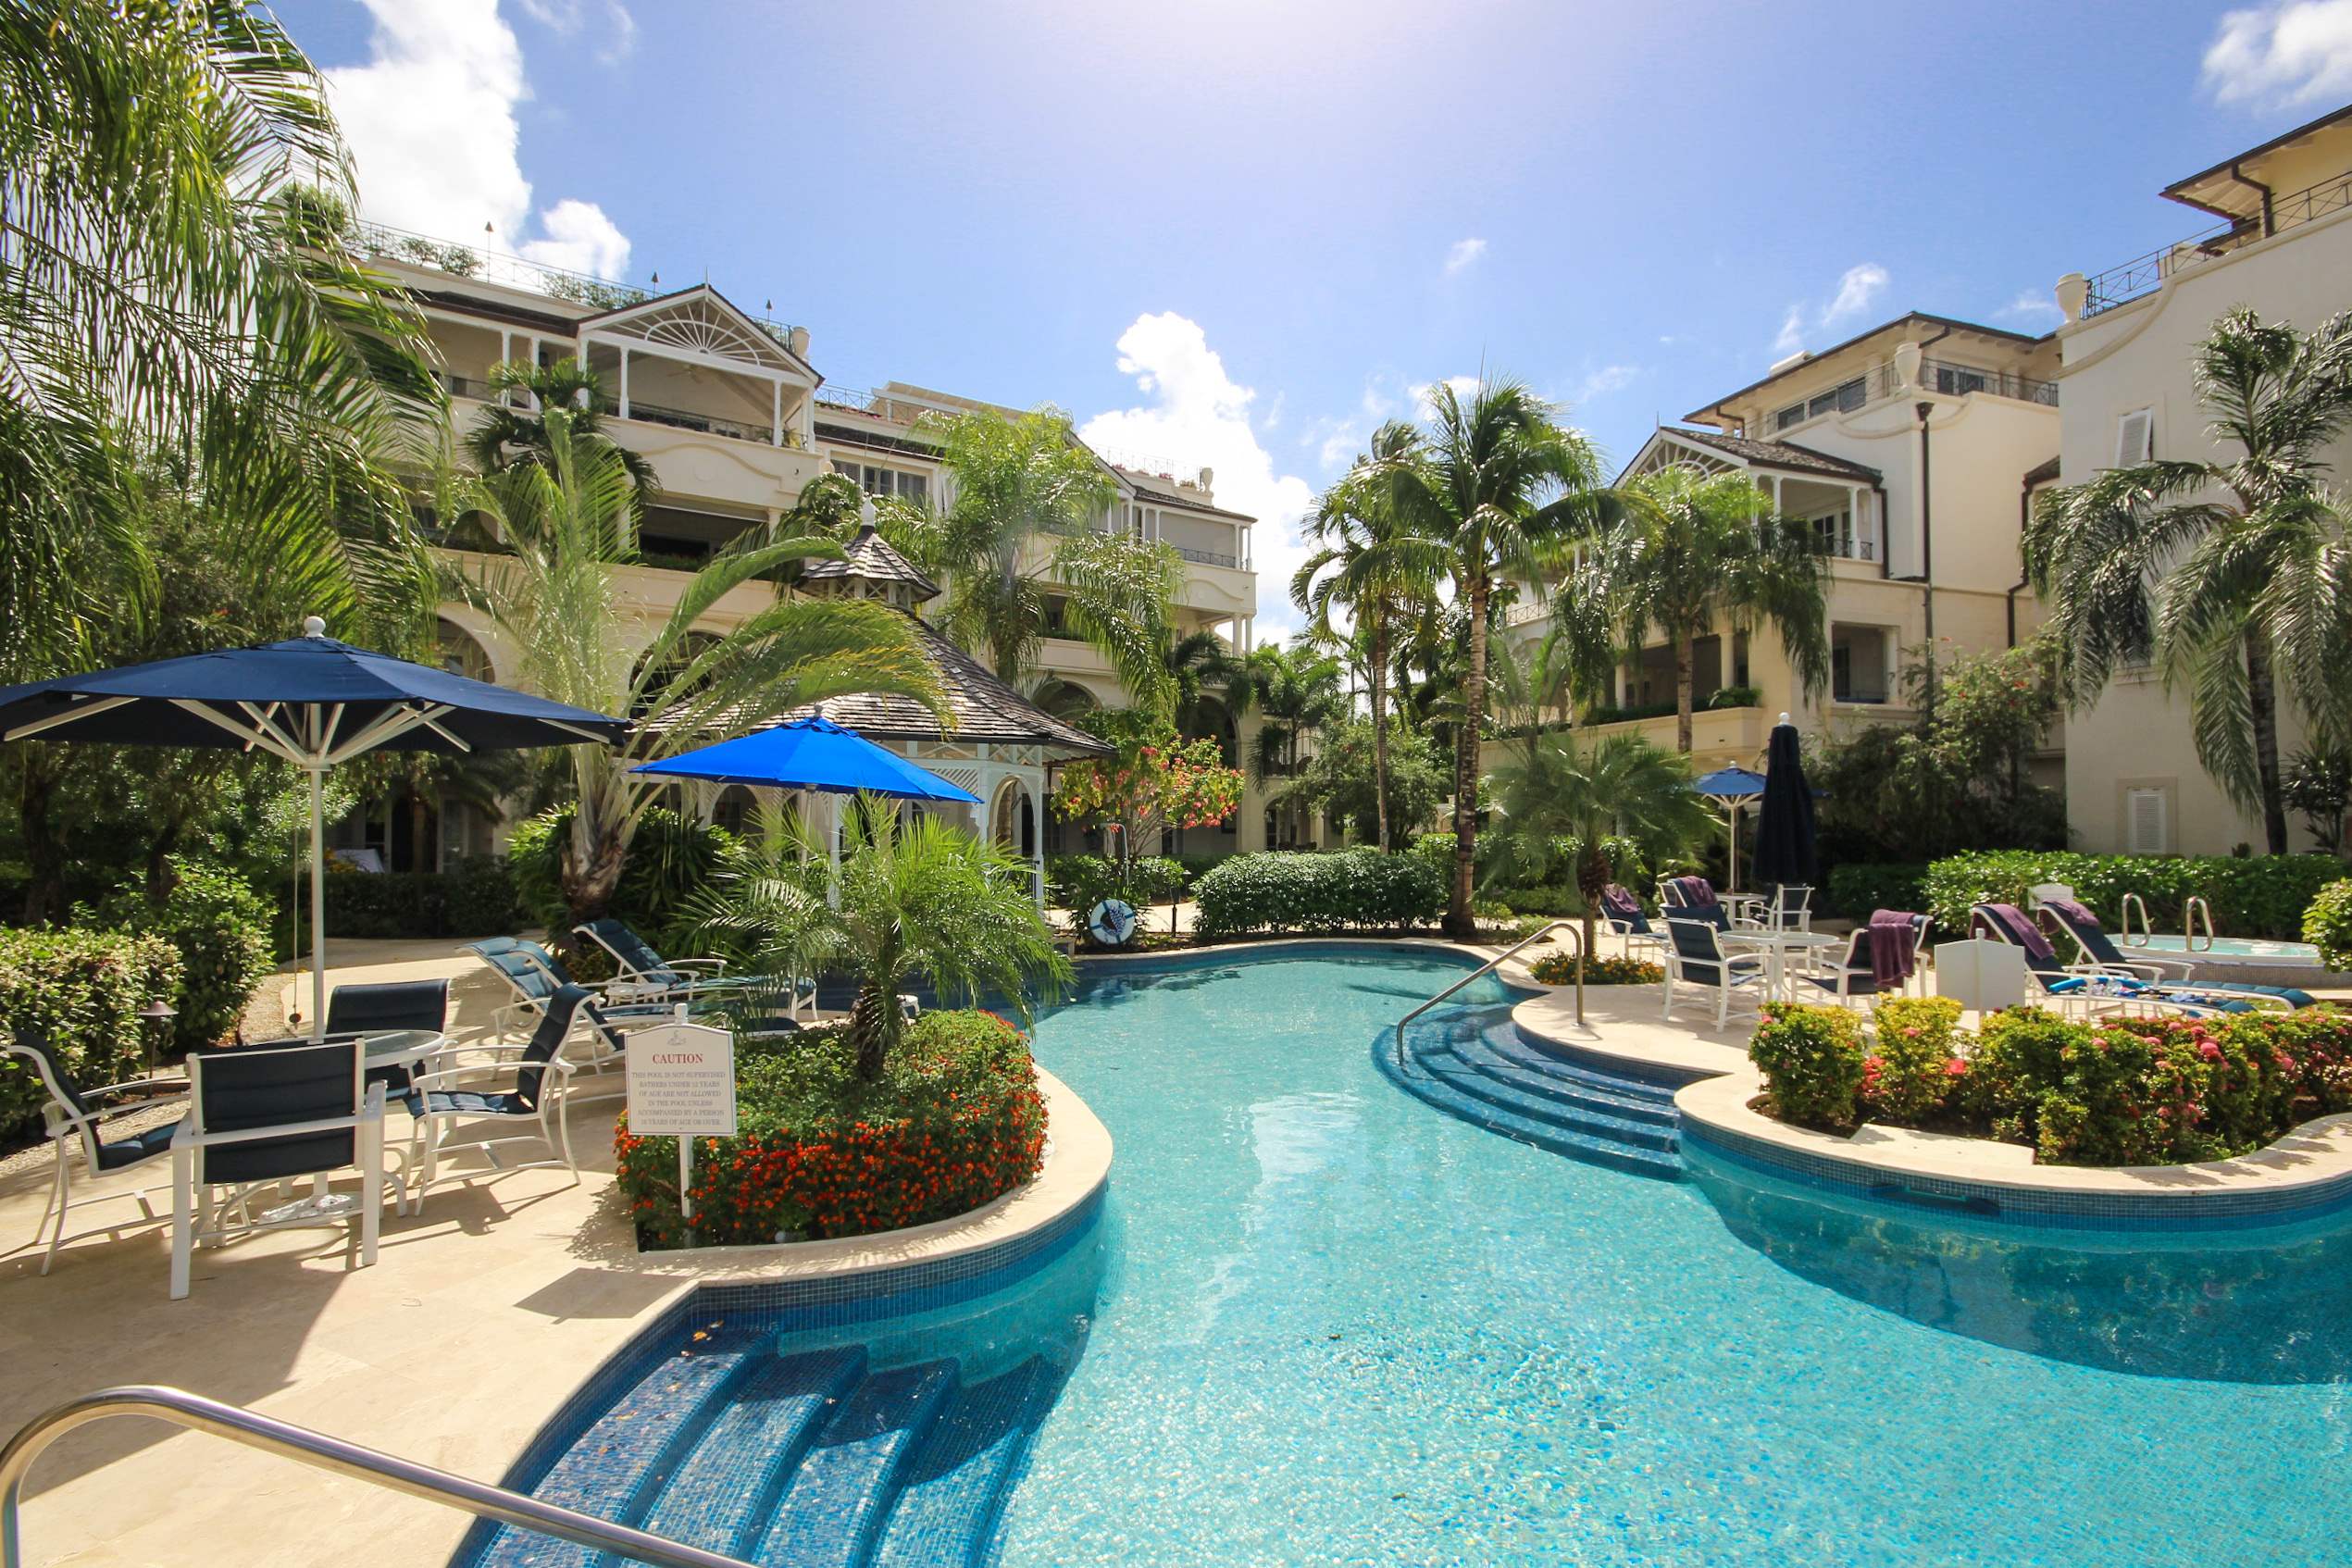 Schooner Bay 205, Three Bedroom rate, 3 bedroom apartment in St. James & West Coast, Barbados Photo #11